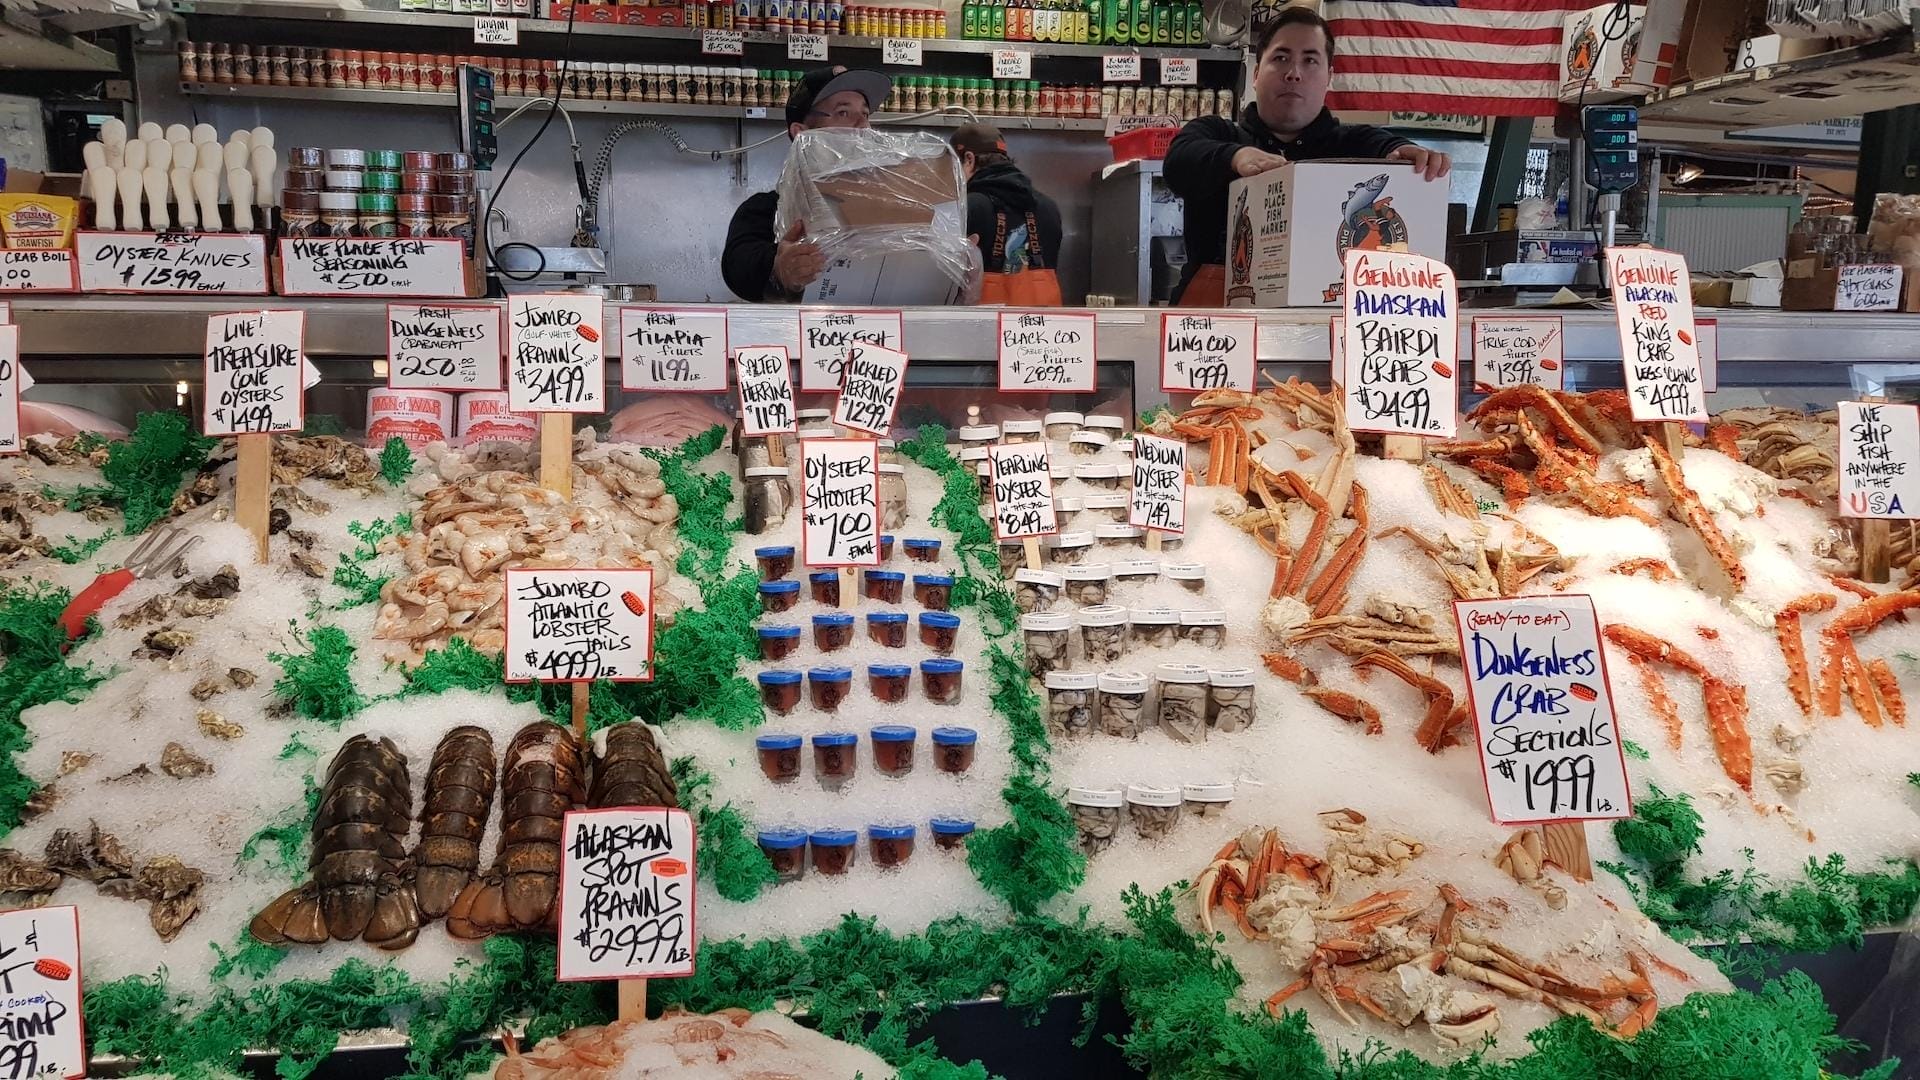 Pike place fish market